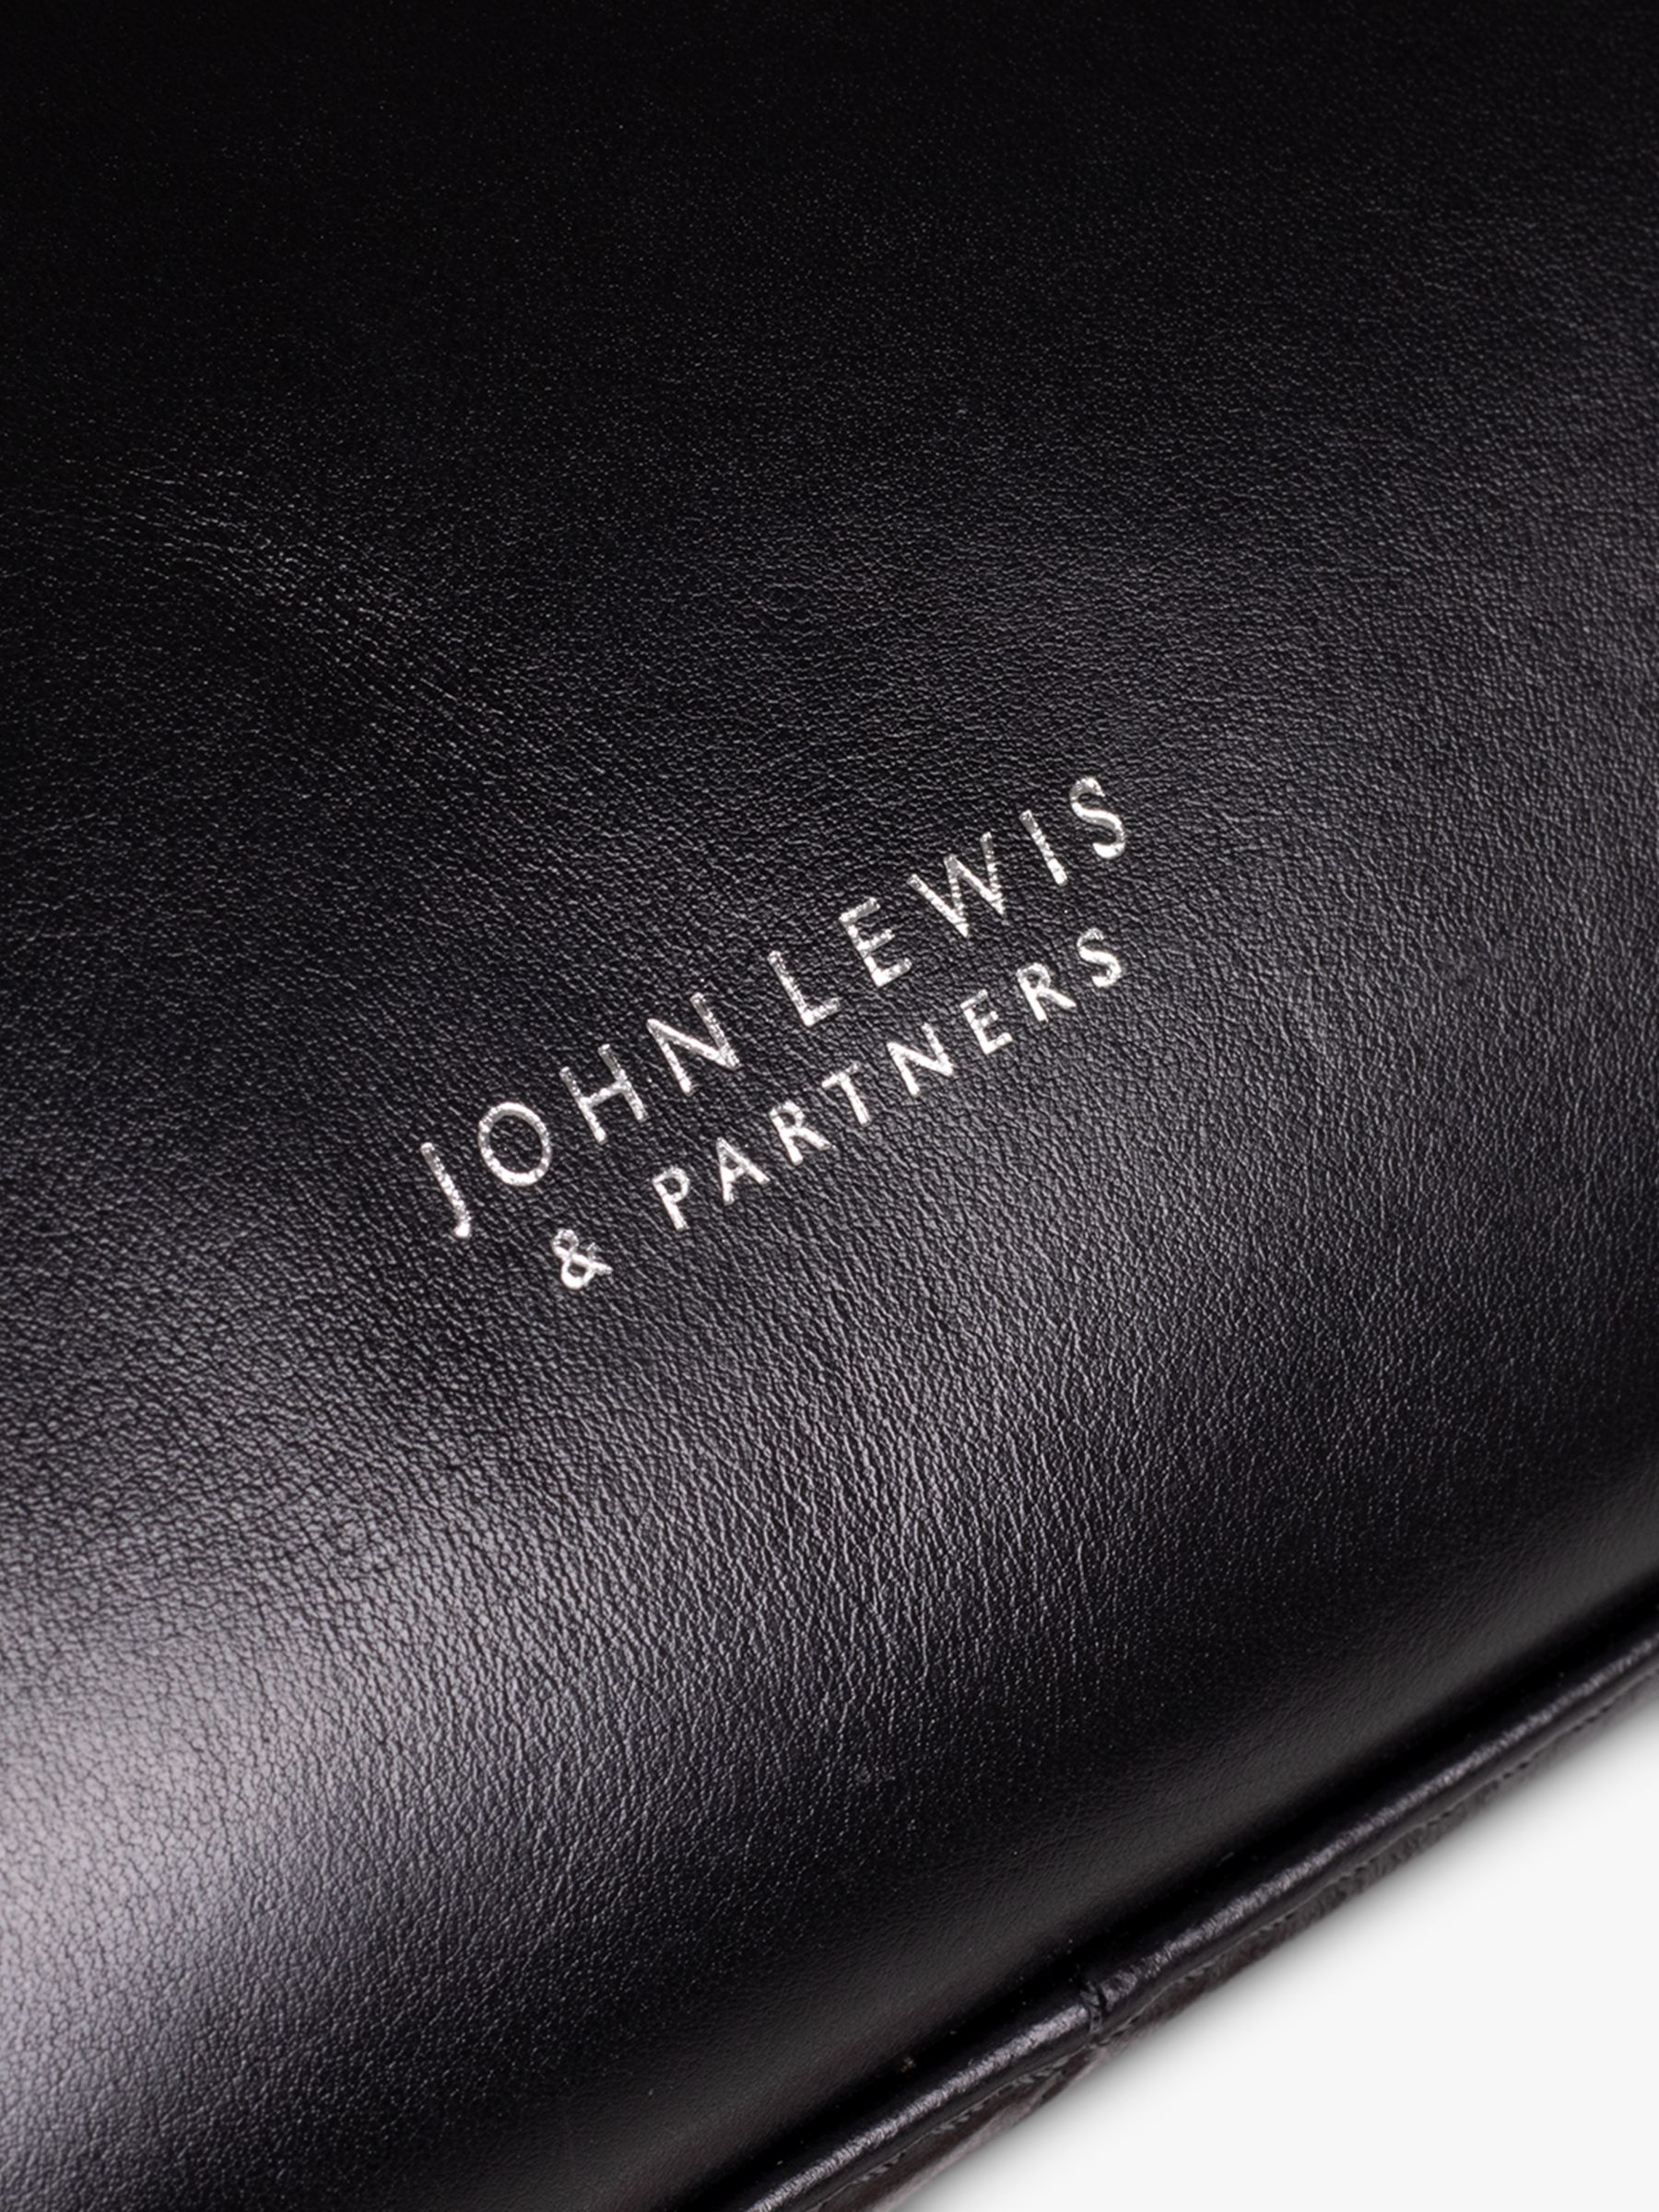 John Lewis Vegetable Tan Leather Wash Bag, Black 5